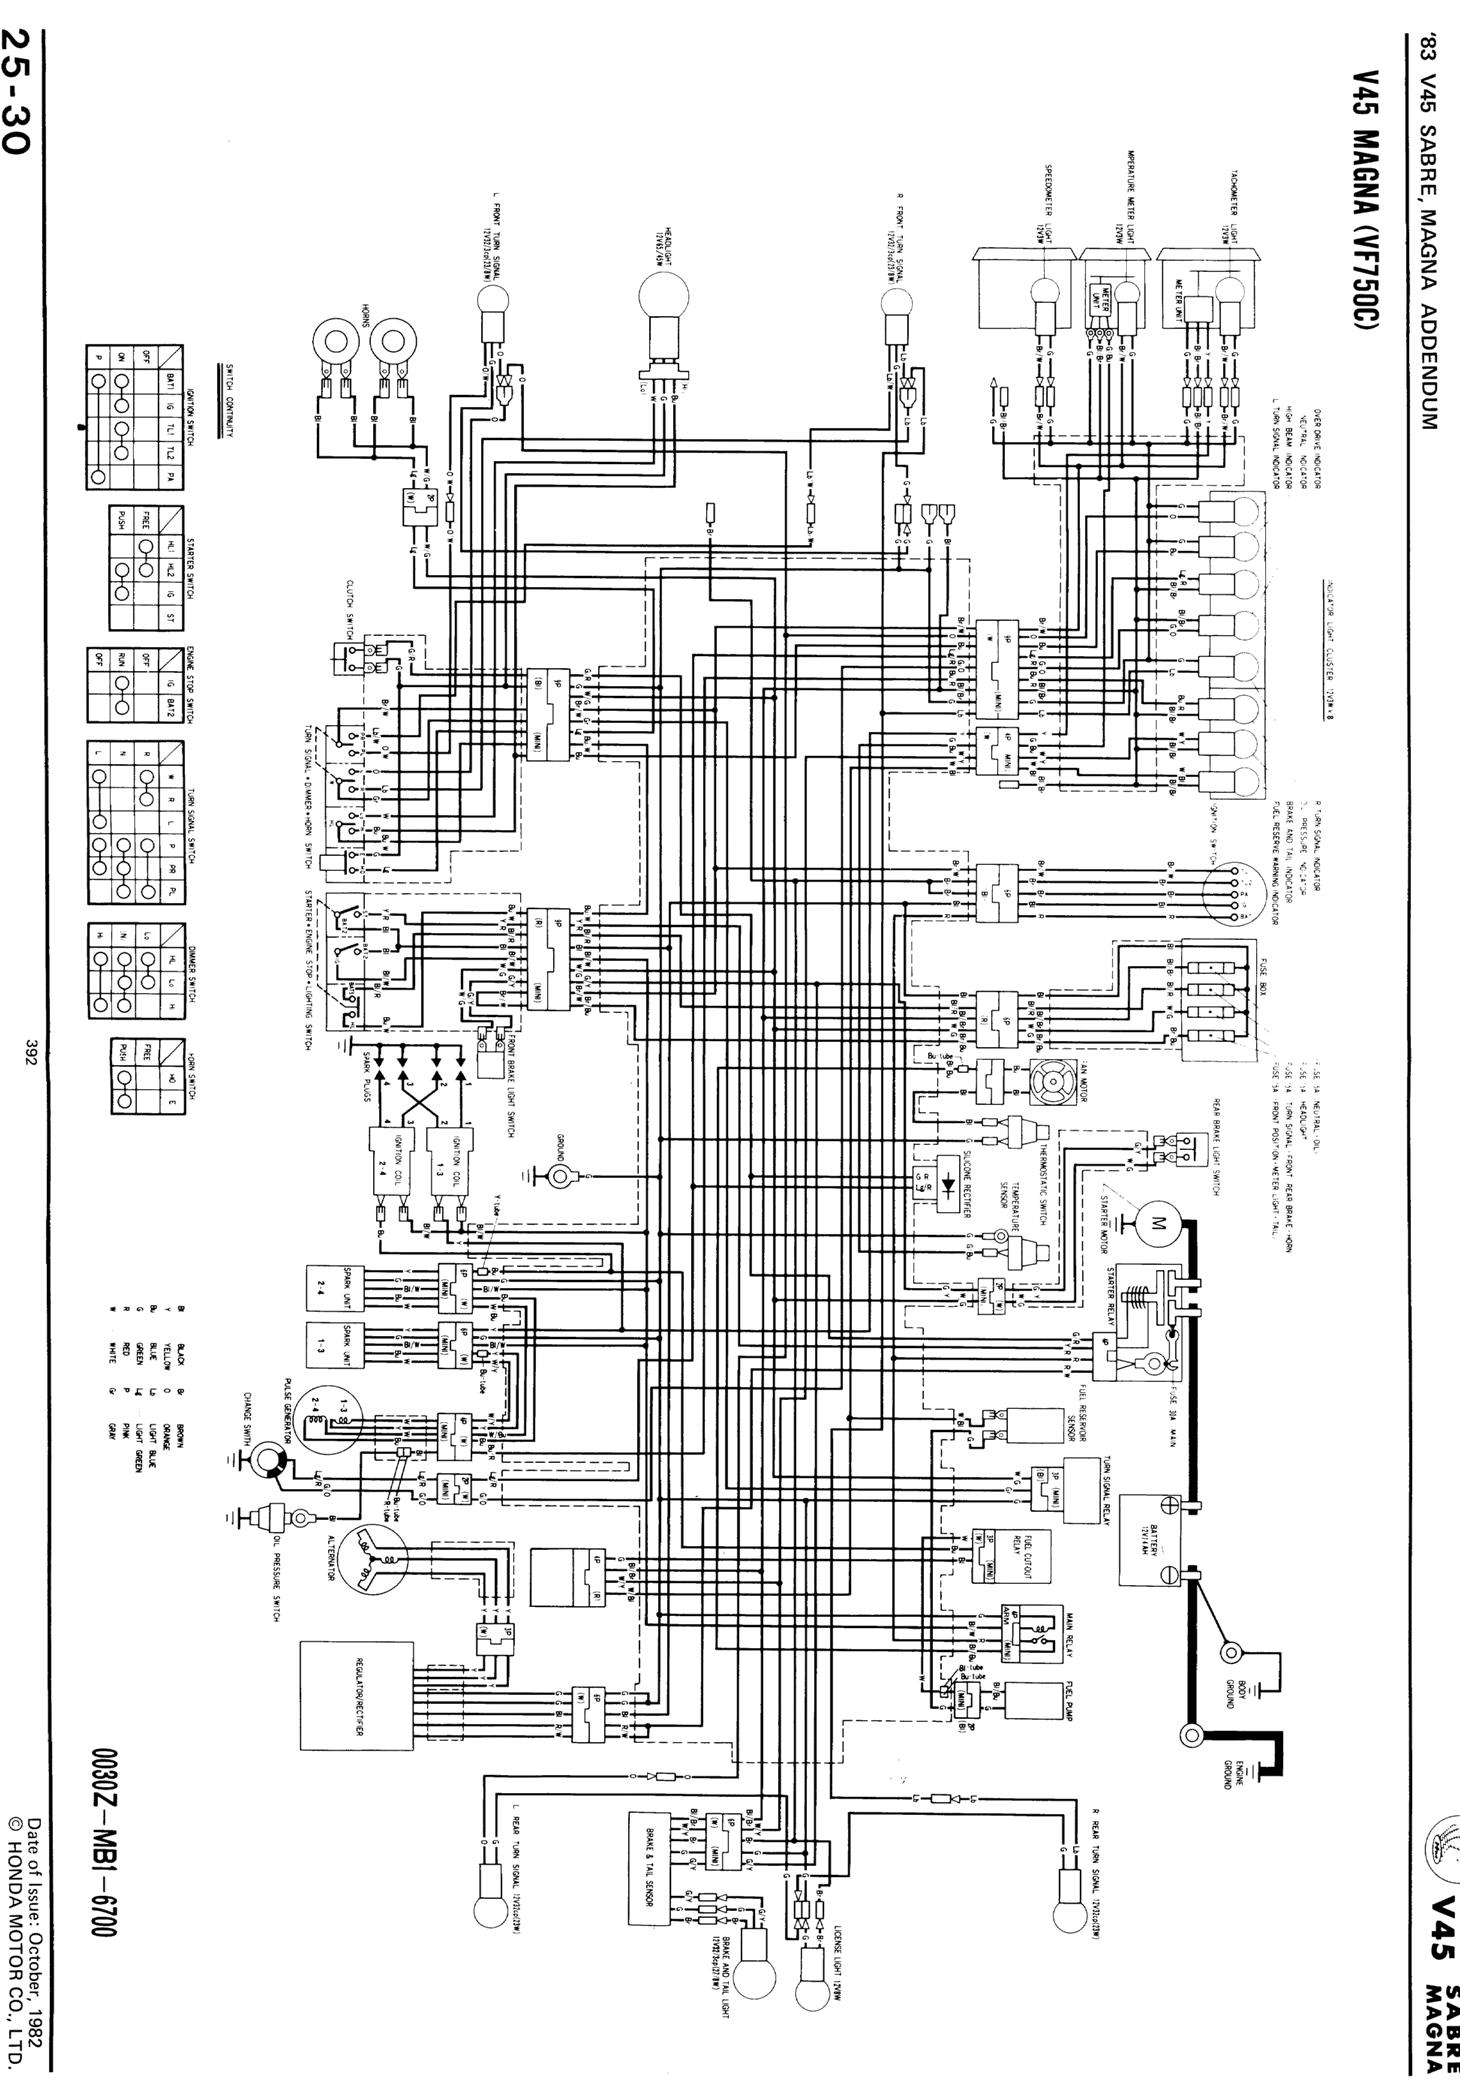 1984 Honda v45 magna wiring diagram #3